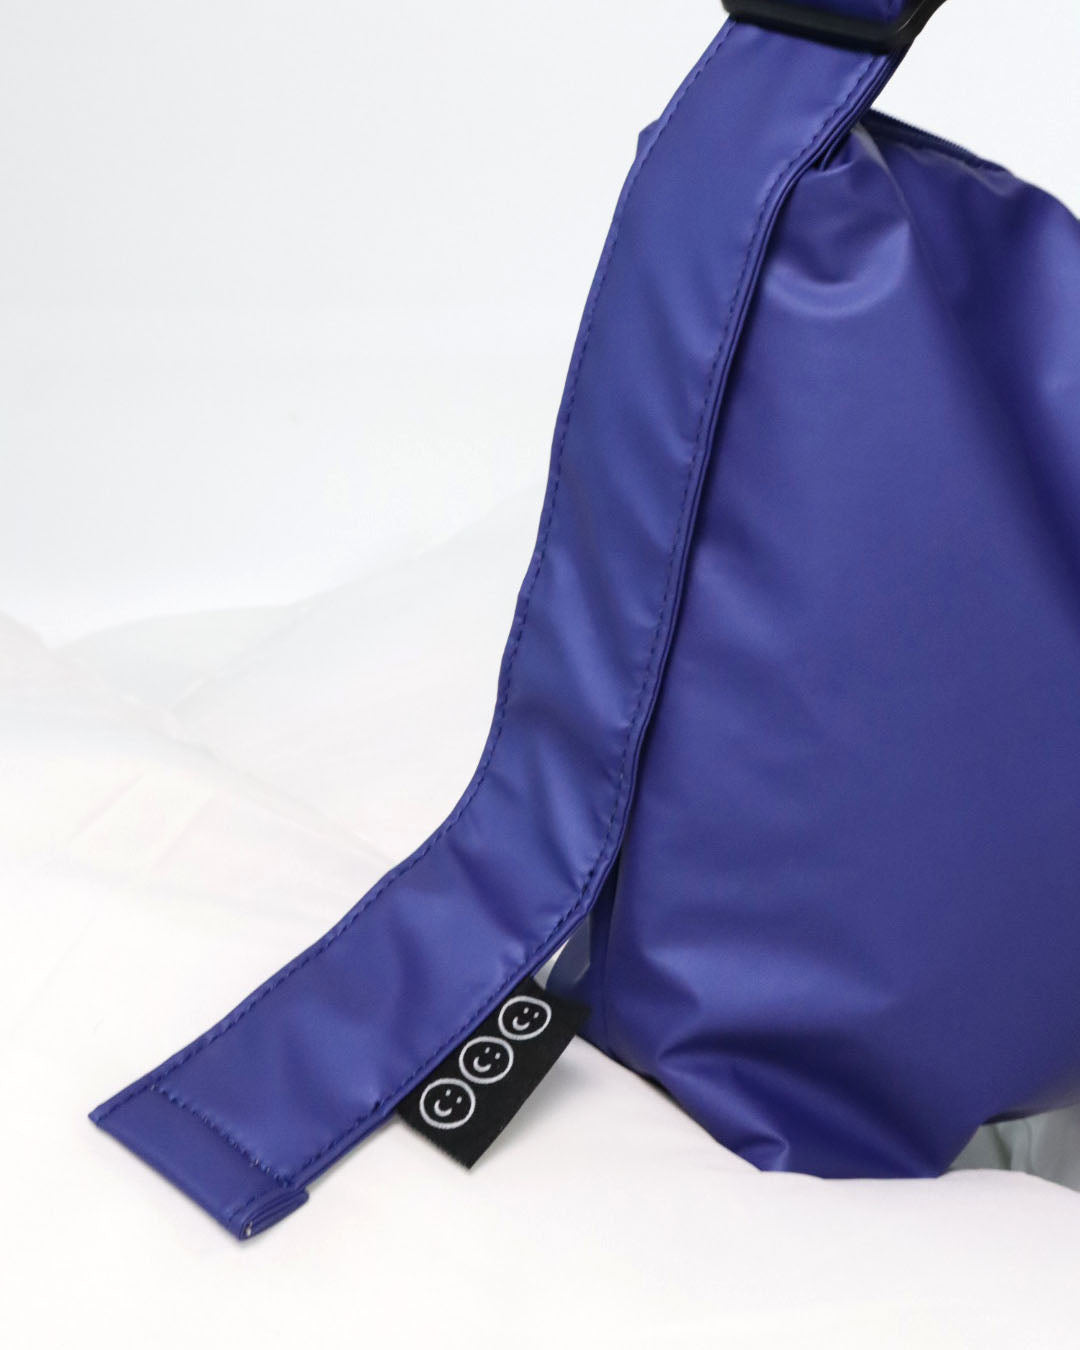 Signature ZZZ Pillow Sling/Shoulder Bag in Metallic Cobalt